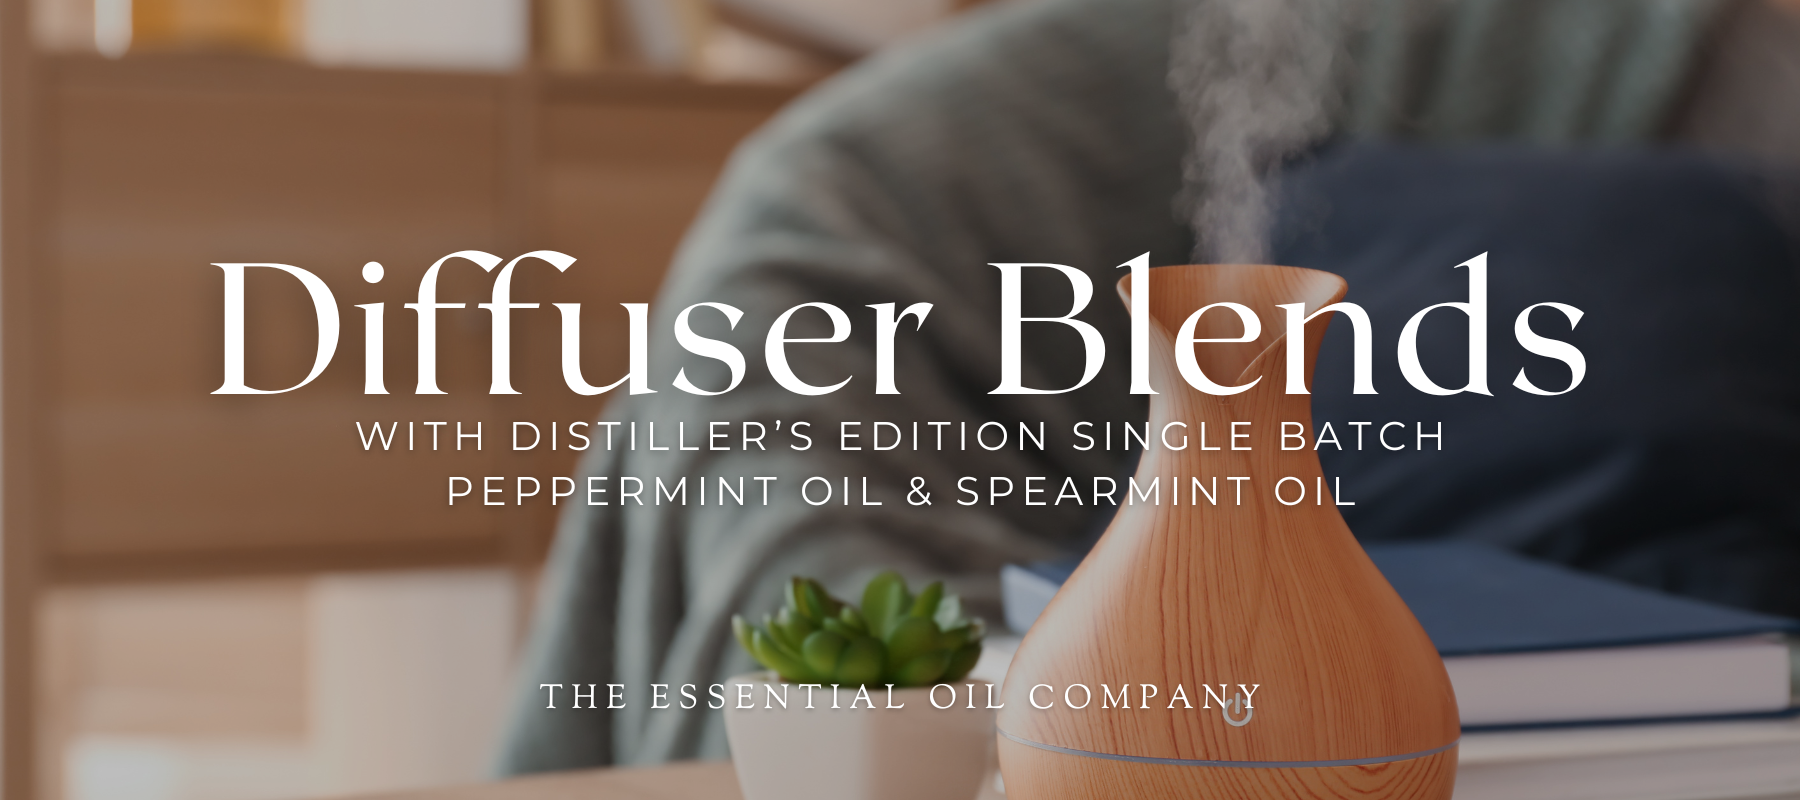 Diffuser Blends with Distiller’s Edition Single Batch Peppermint Oil & Spearmint Oil 